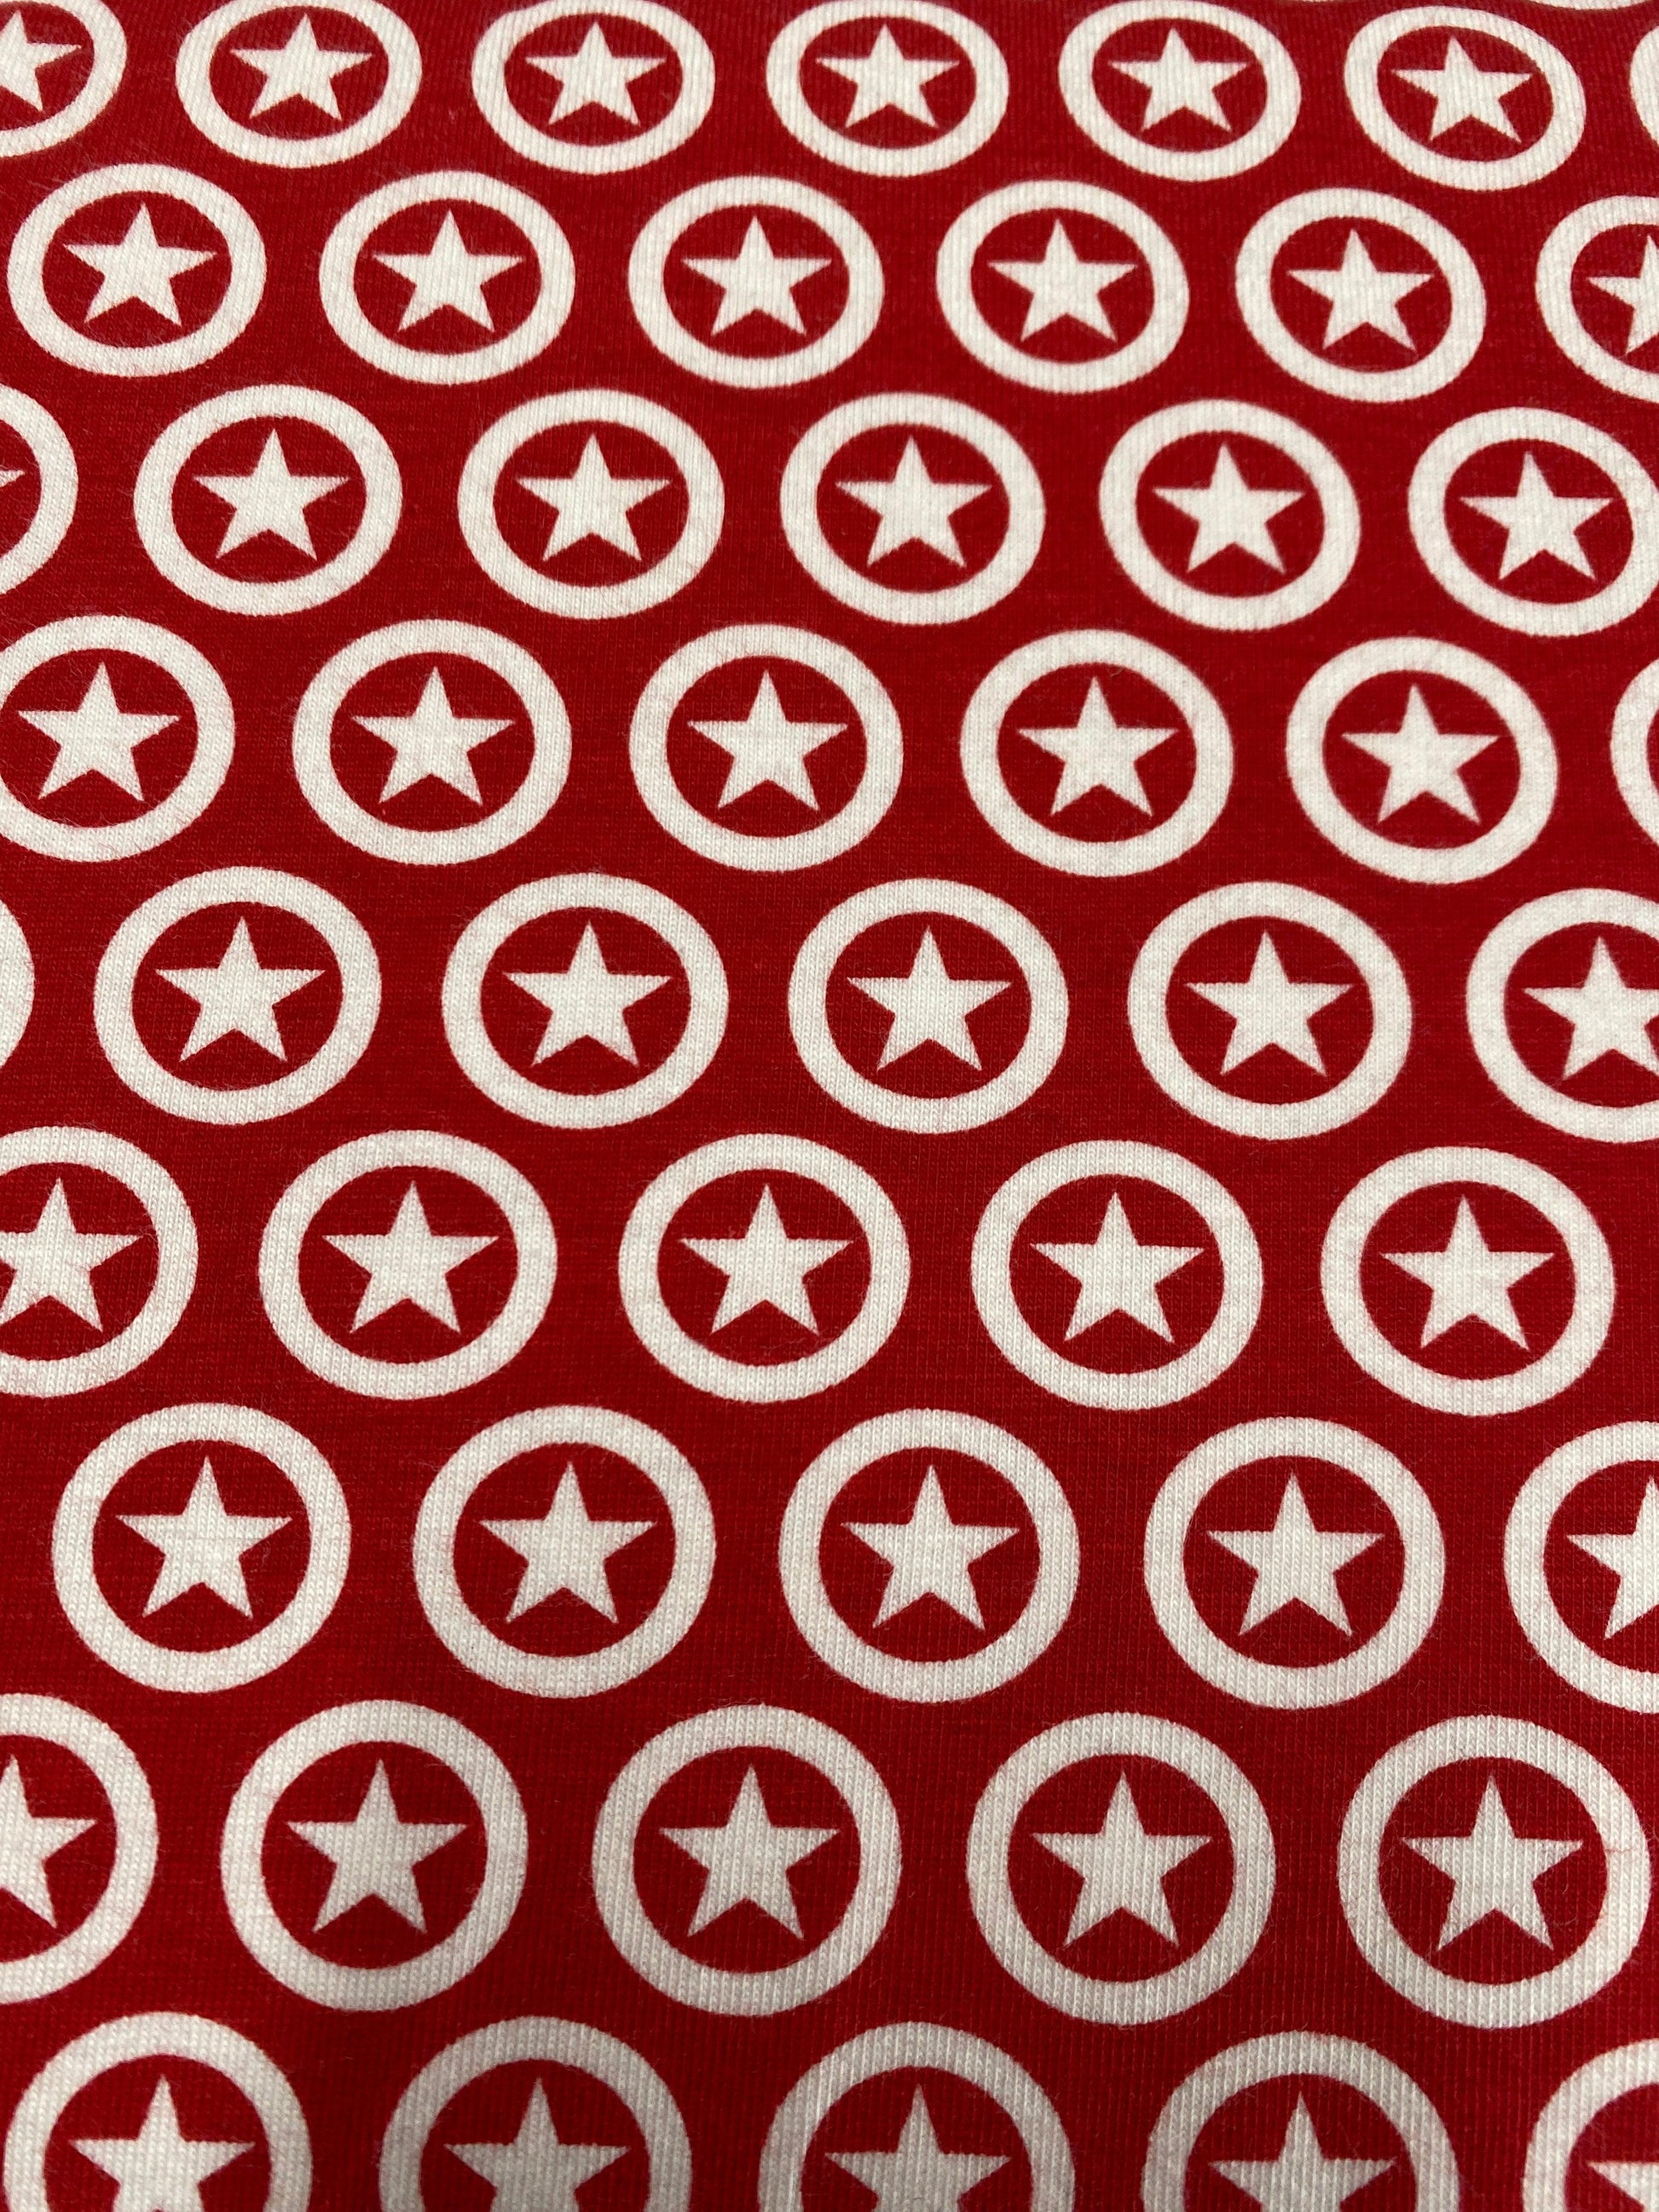 Star Circle on Cream Cotton/Spandex Jersey Fabric - Nature's Fabrics